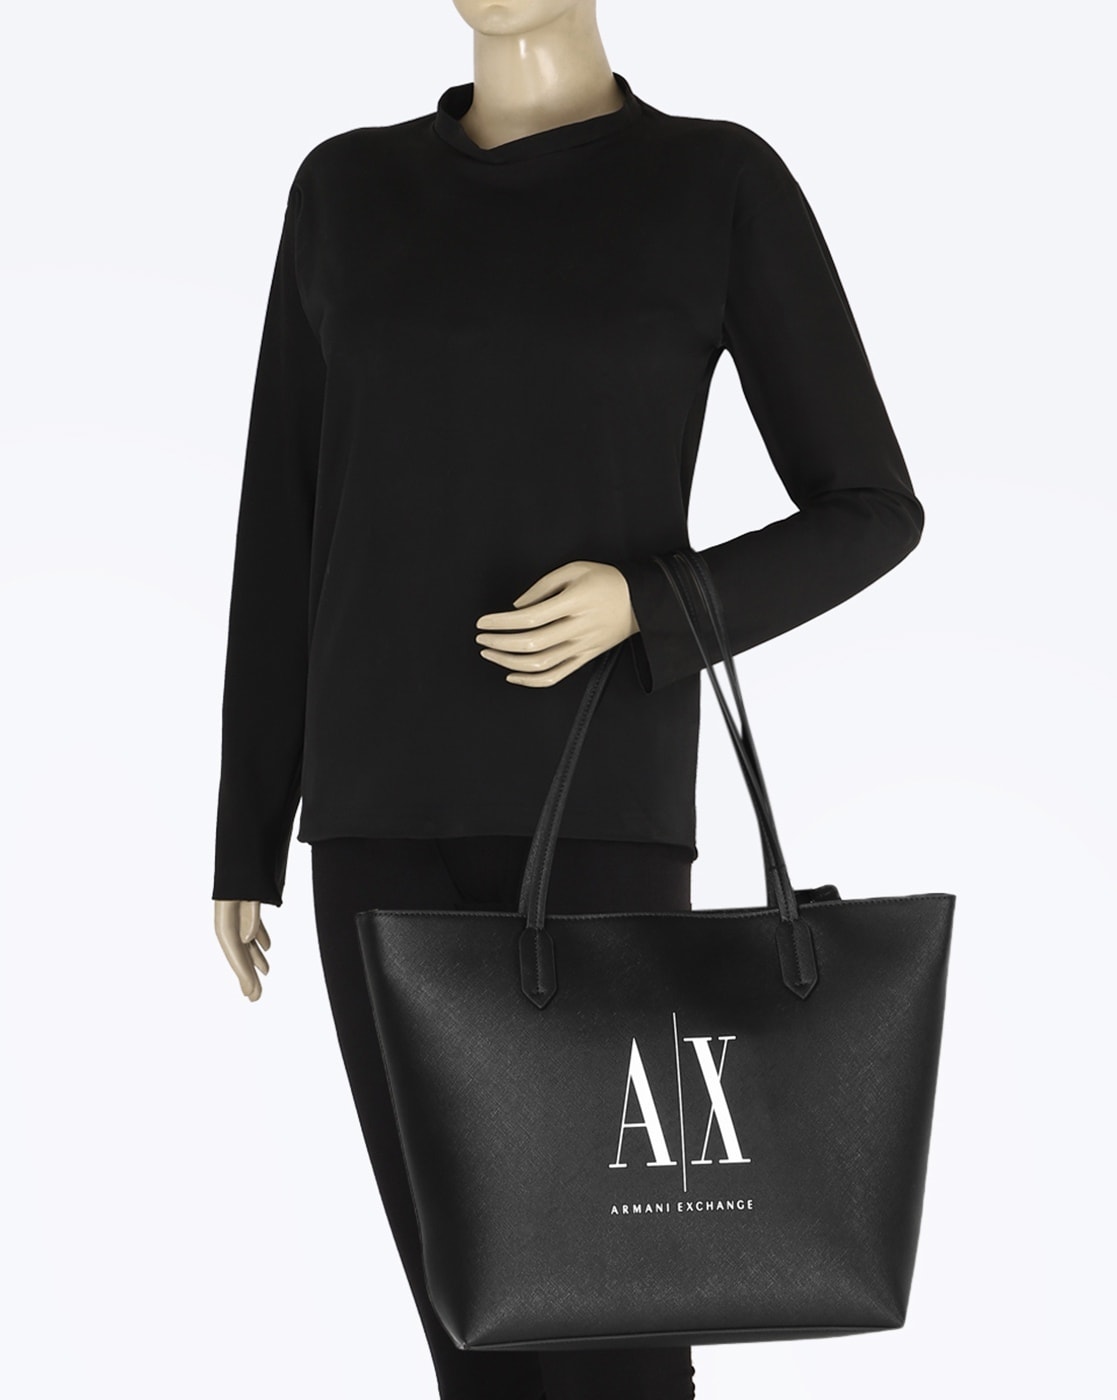 Armani Exchange 2 Medium Shopping Bags. | eBay